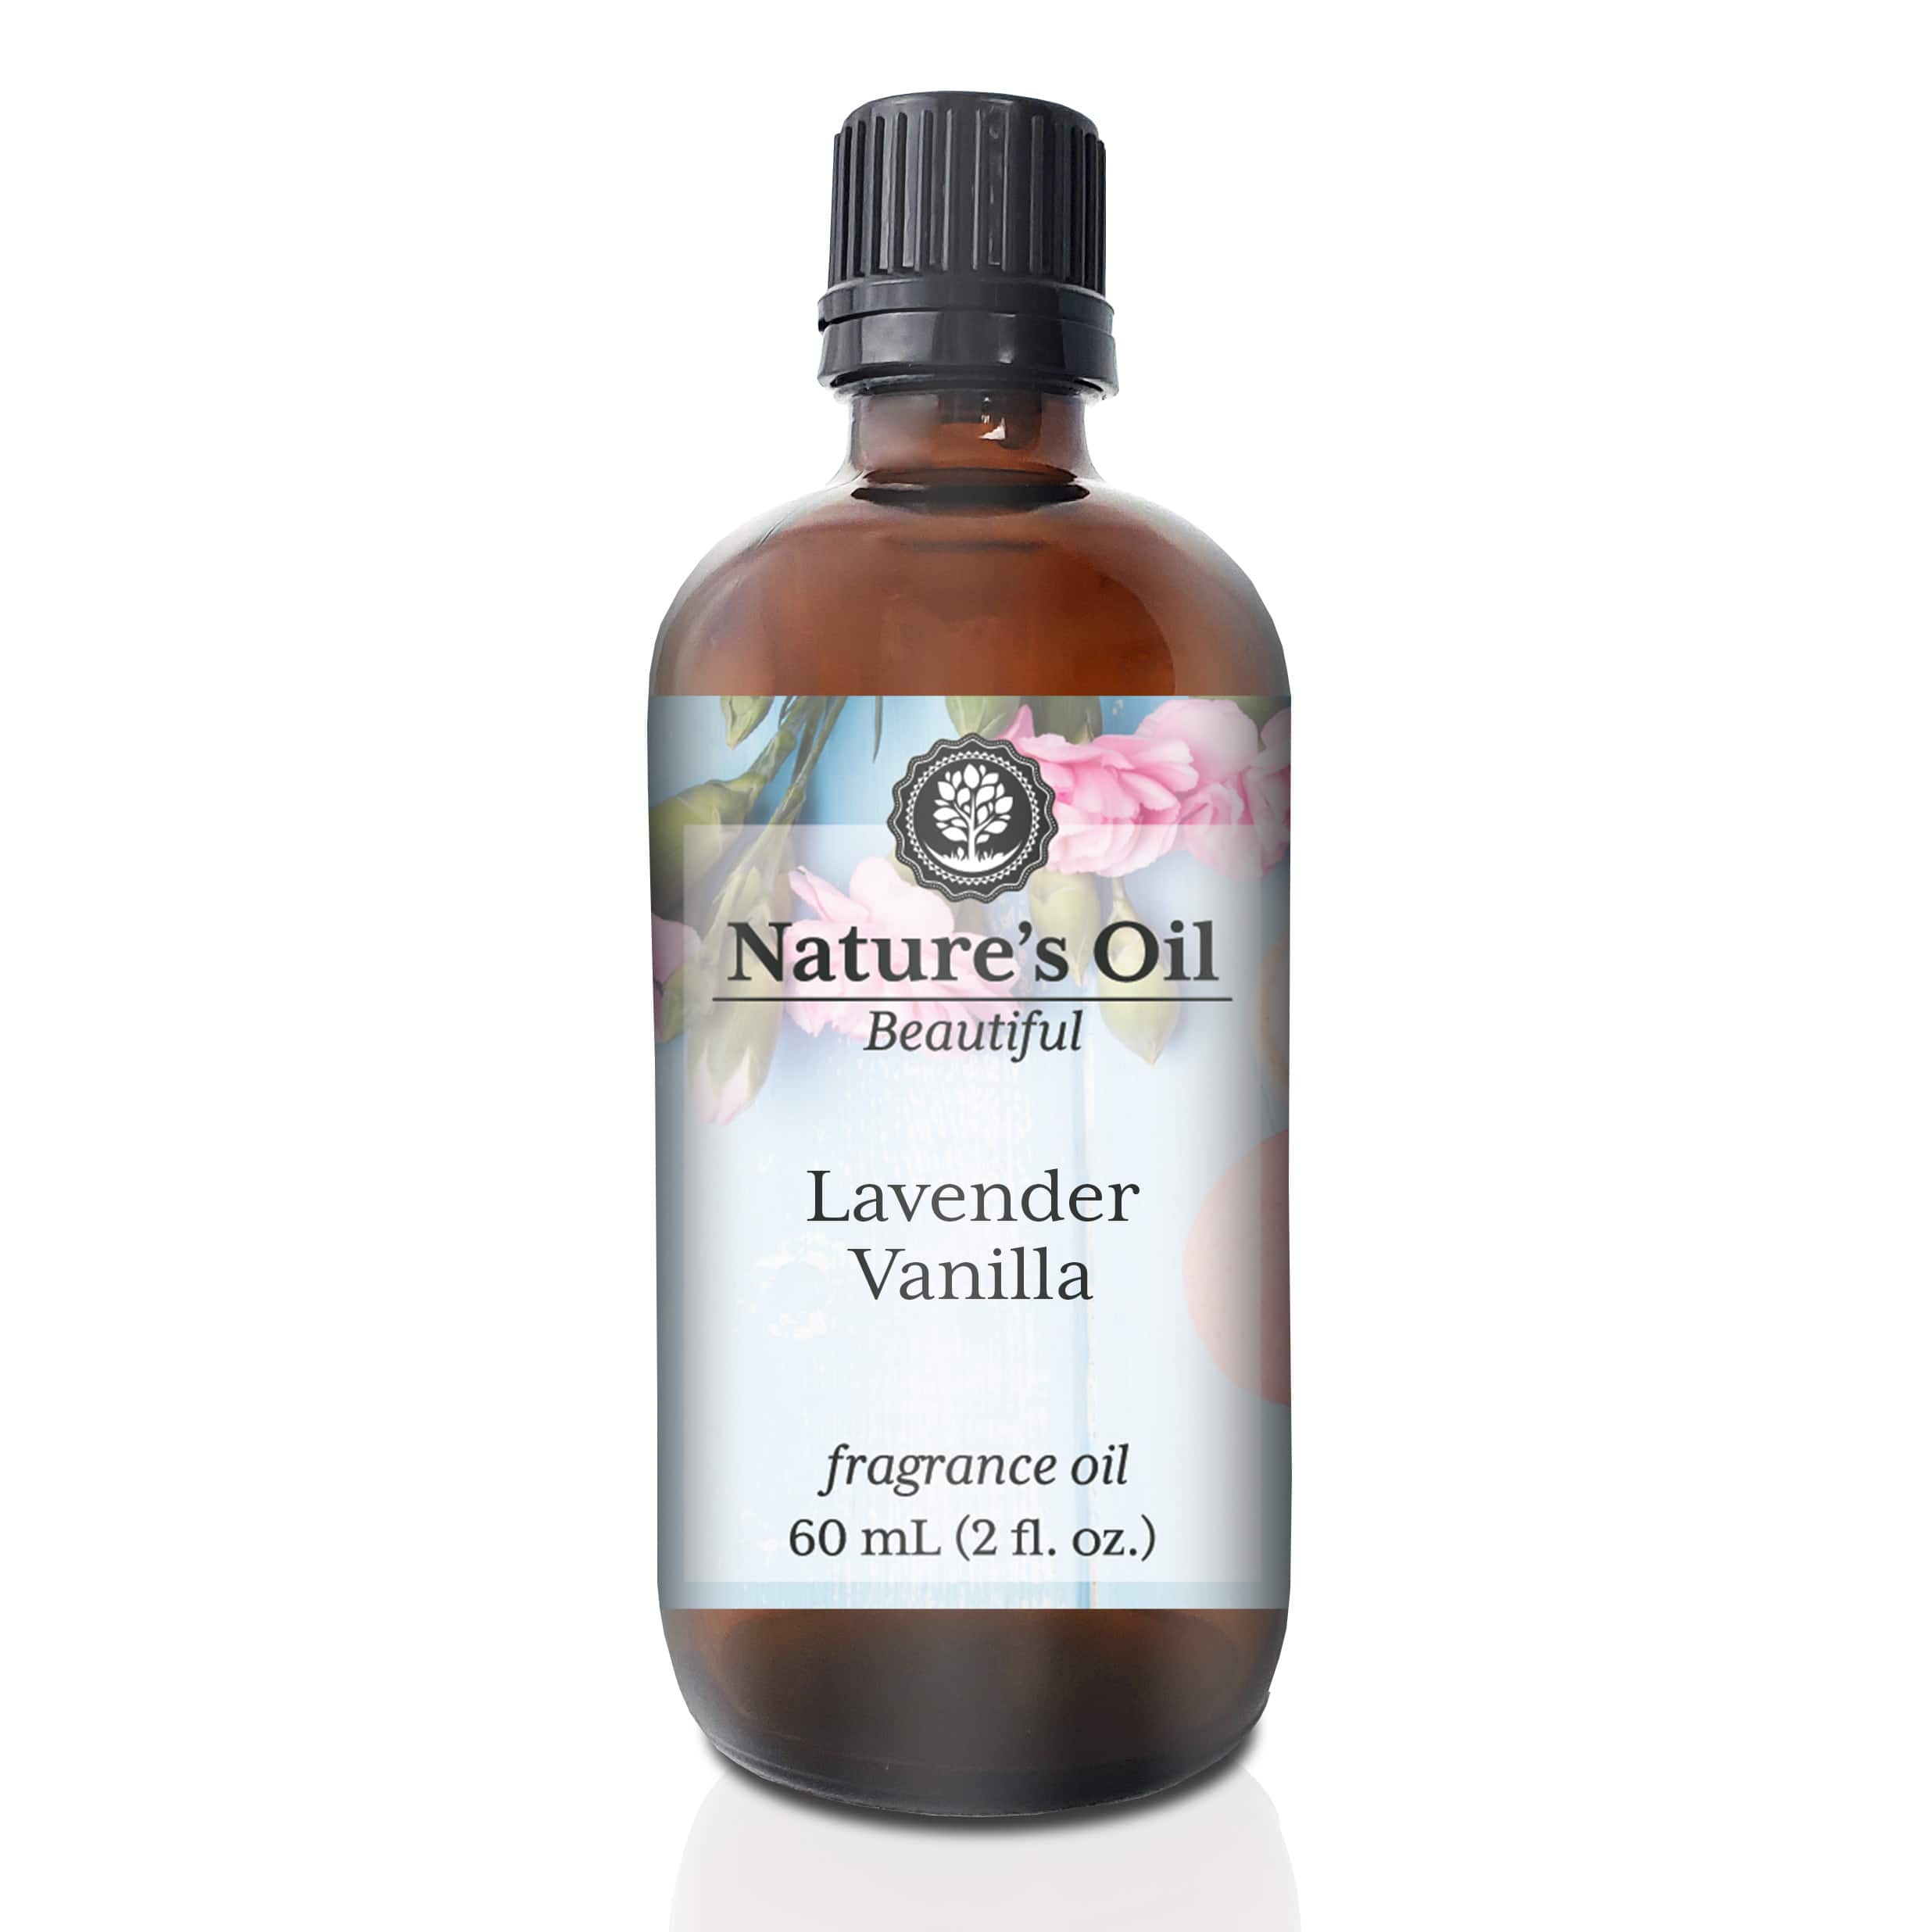 Nature's Oil Lavender Vanilla Fragrance Oil